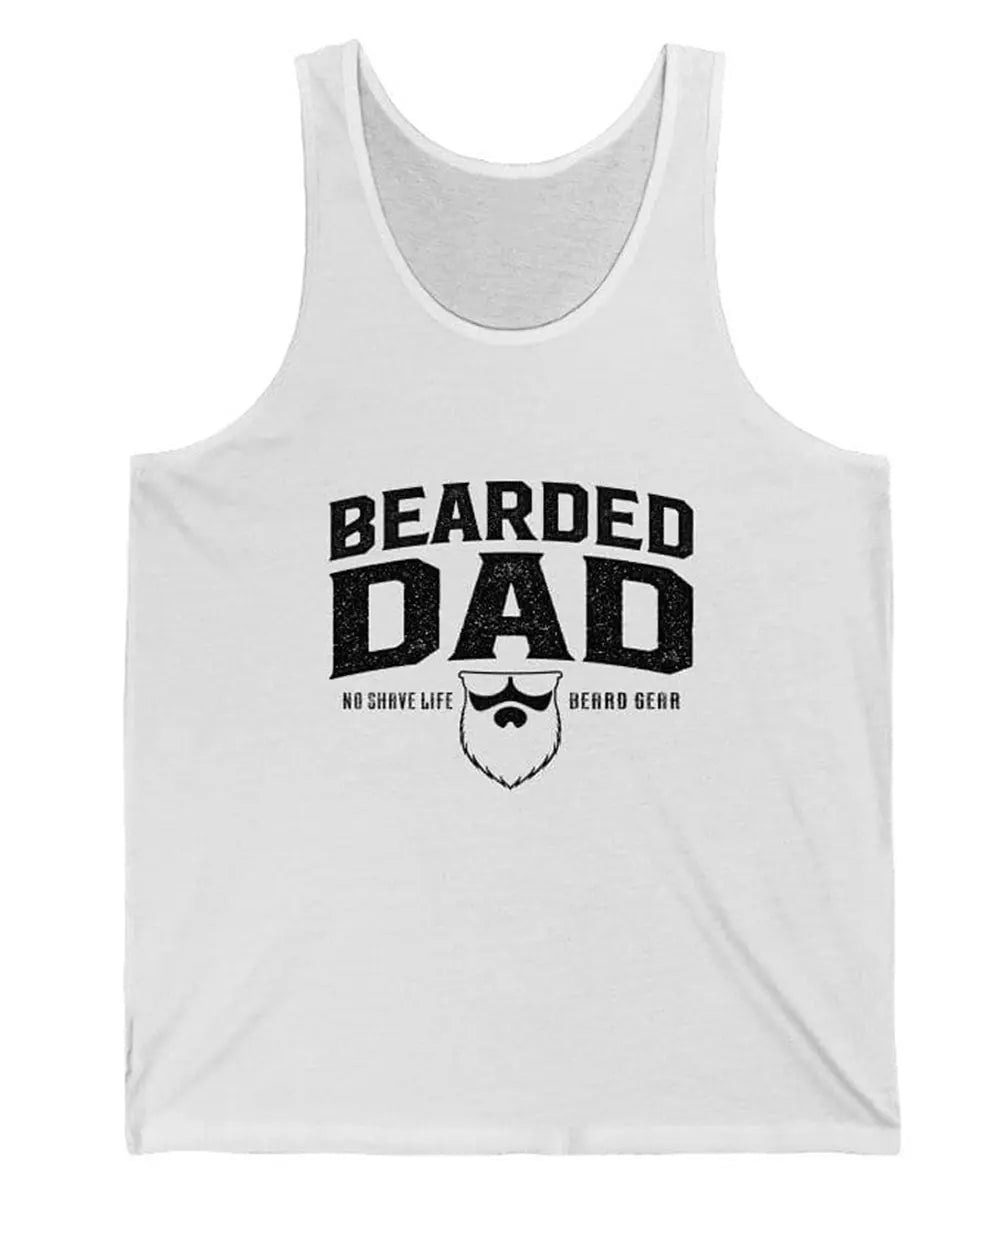 BEARDED DAD White Men's Tank Top|Mens Tank Top